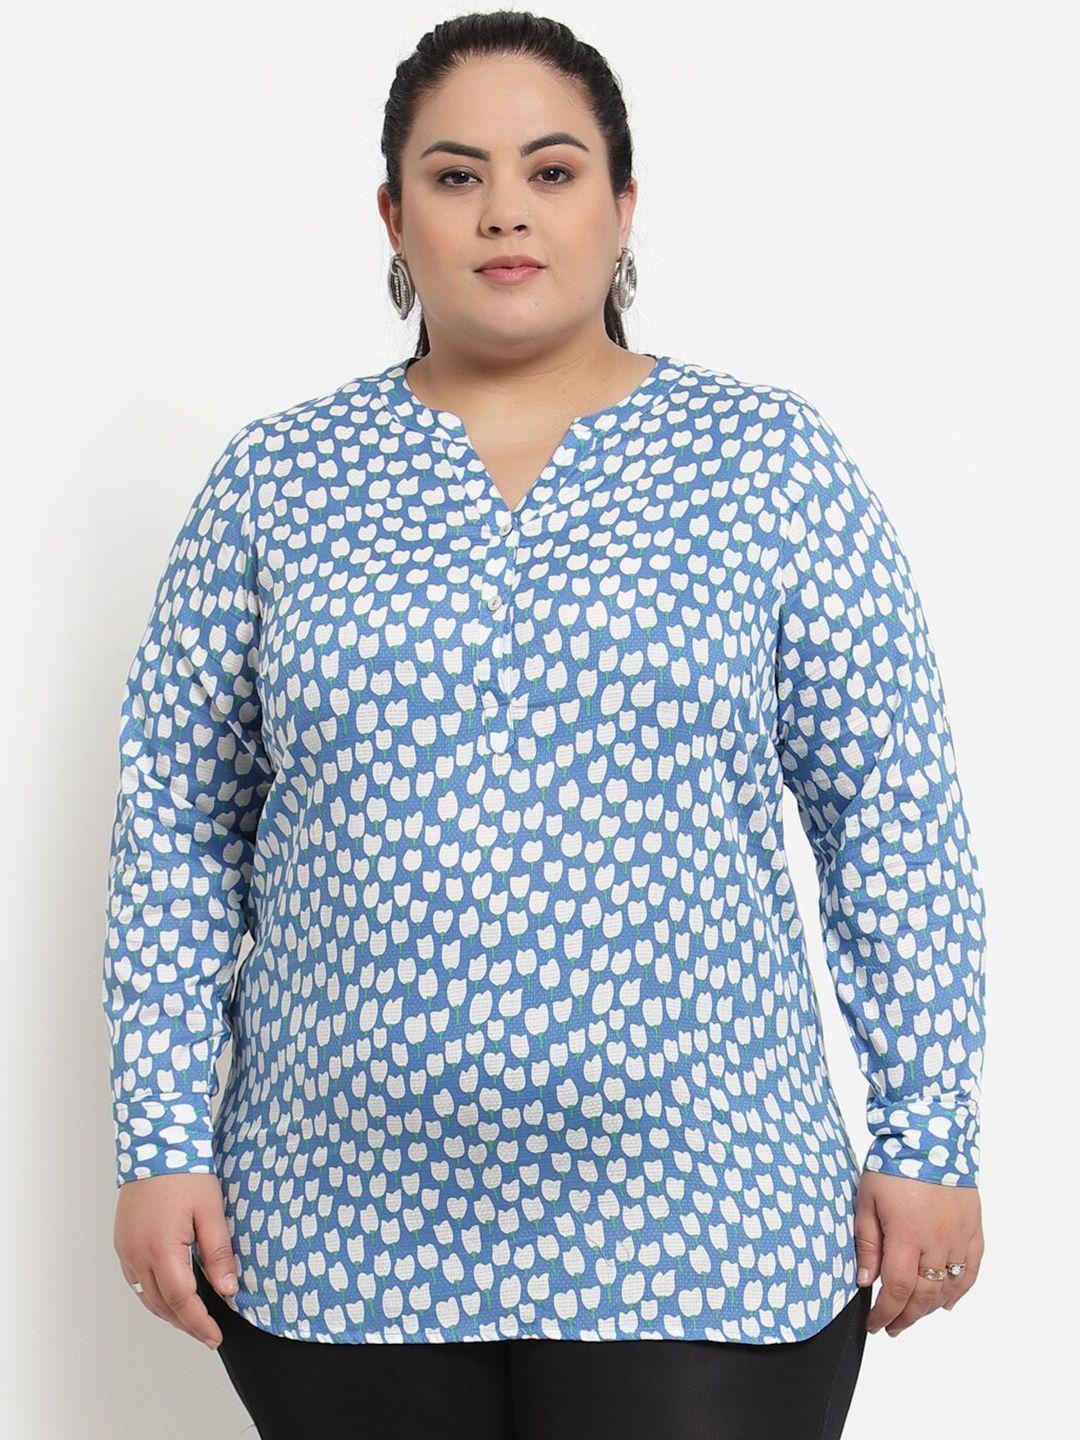 pluss plus size women blue printed top